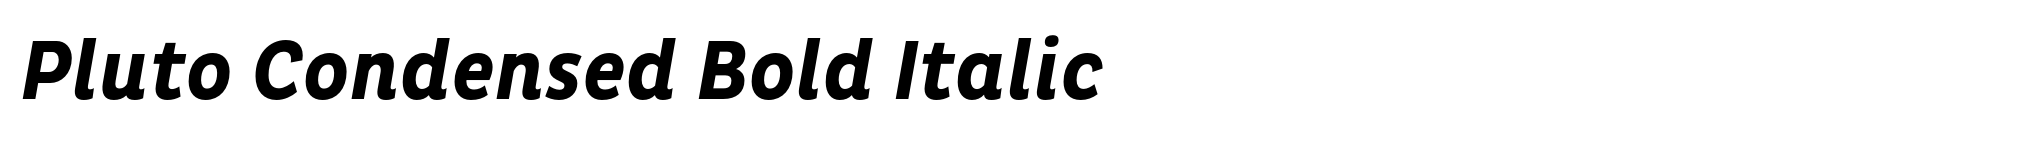 Pluto Condensed Bold Italic image